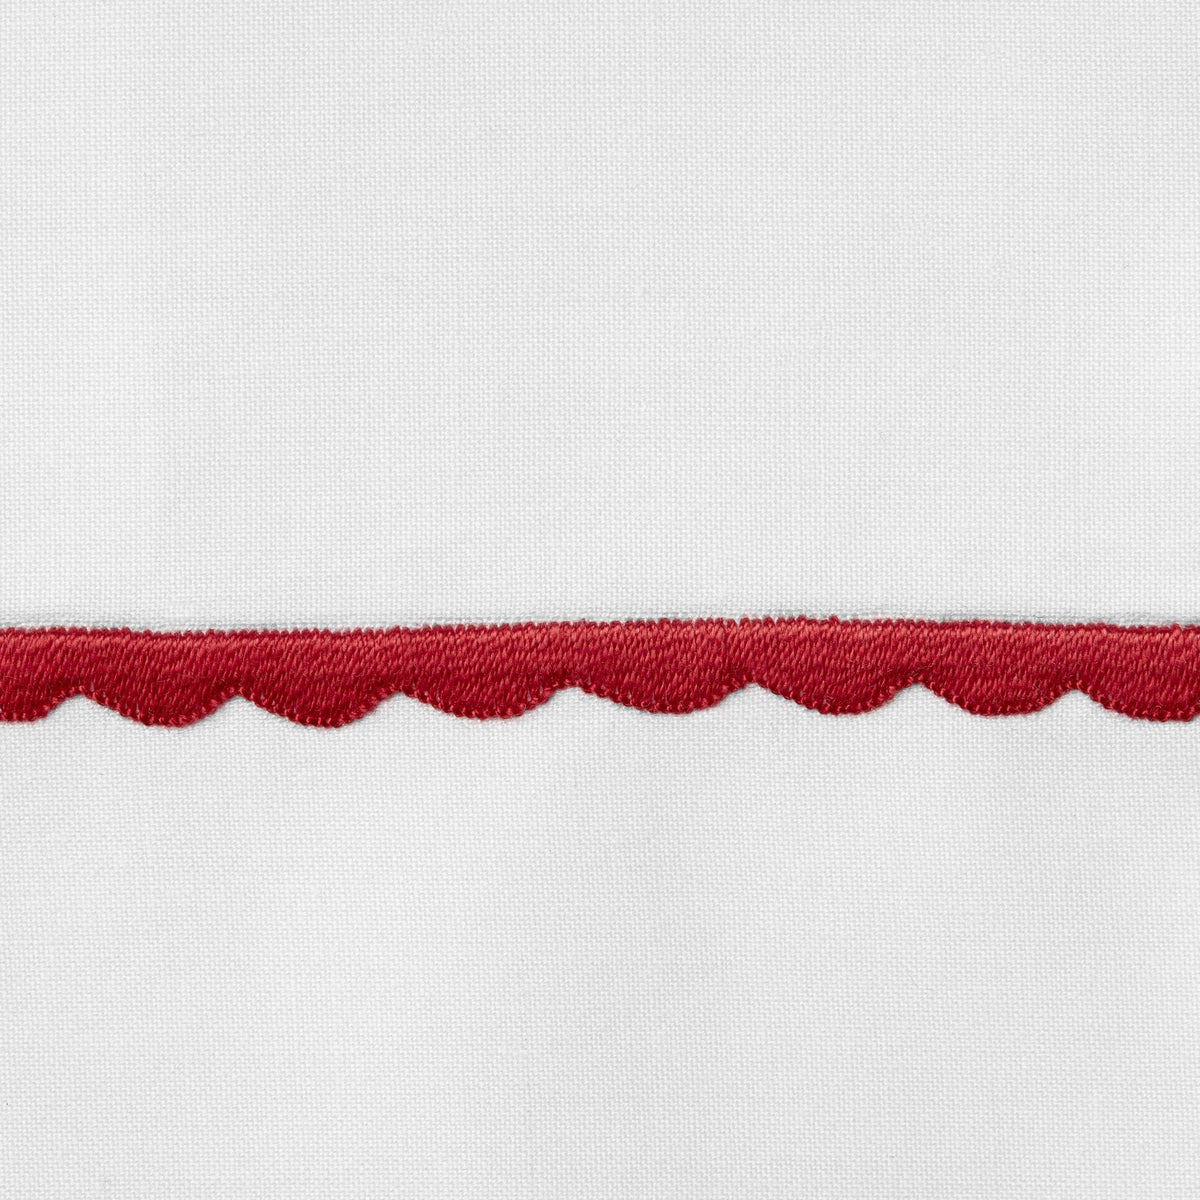 Swatch Sample of Sferra Pettine Bedding Collection White/Crimson